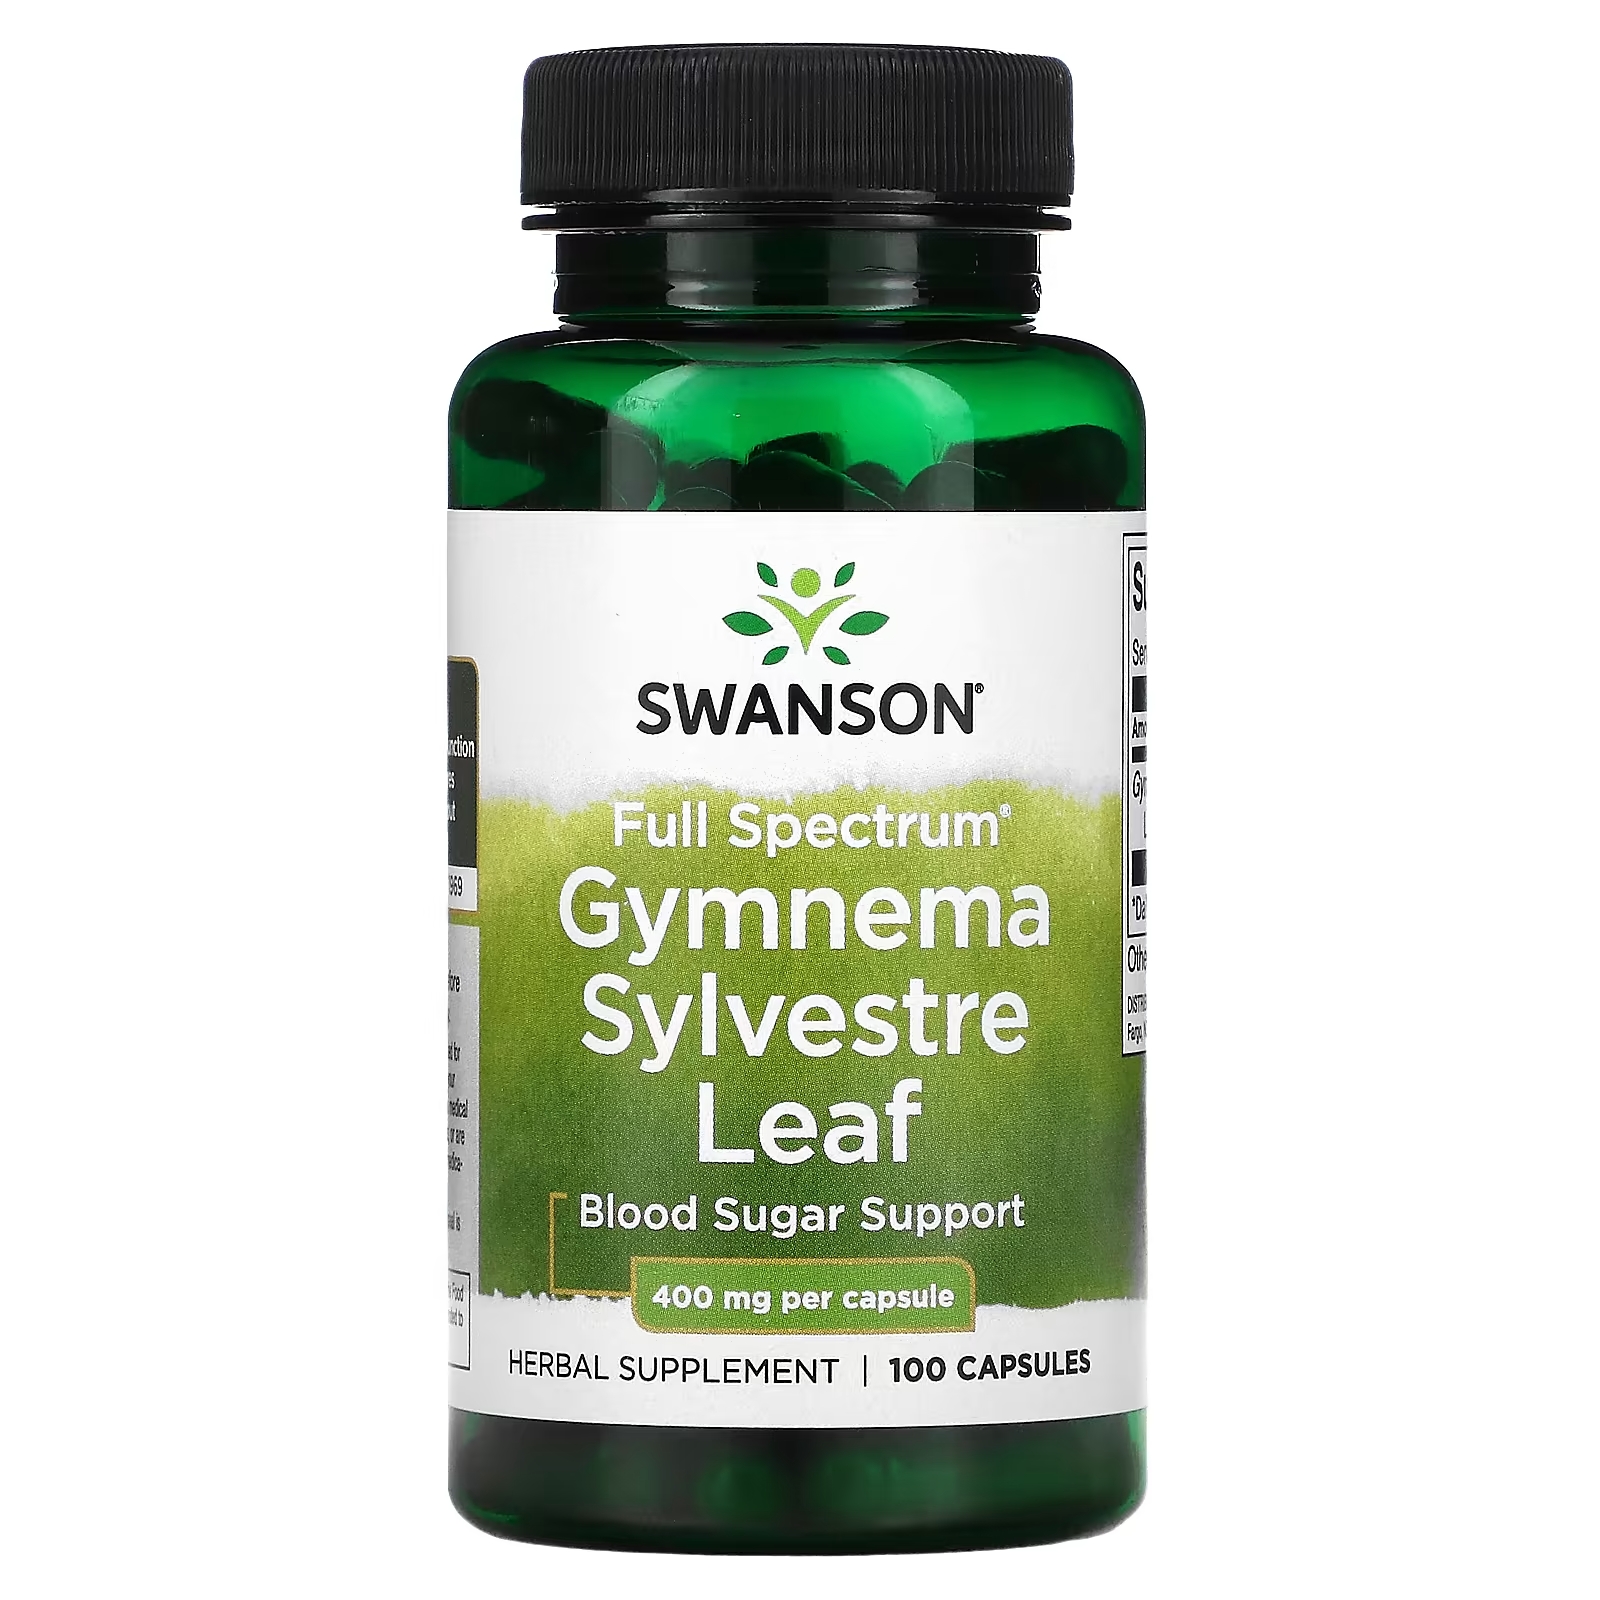 Swanson Gymnema Sylvestre Leaf полный спектр действия 400 мг, 100 капсул swanson butcher s broom полный спектр 470 мг 100 капсул